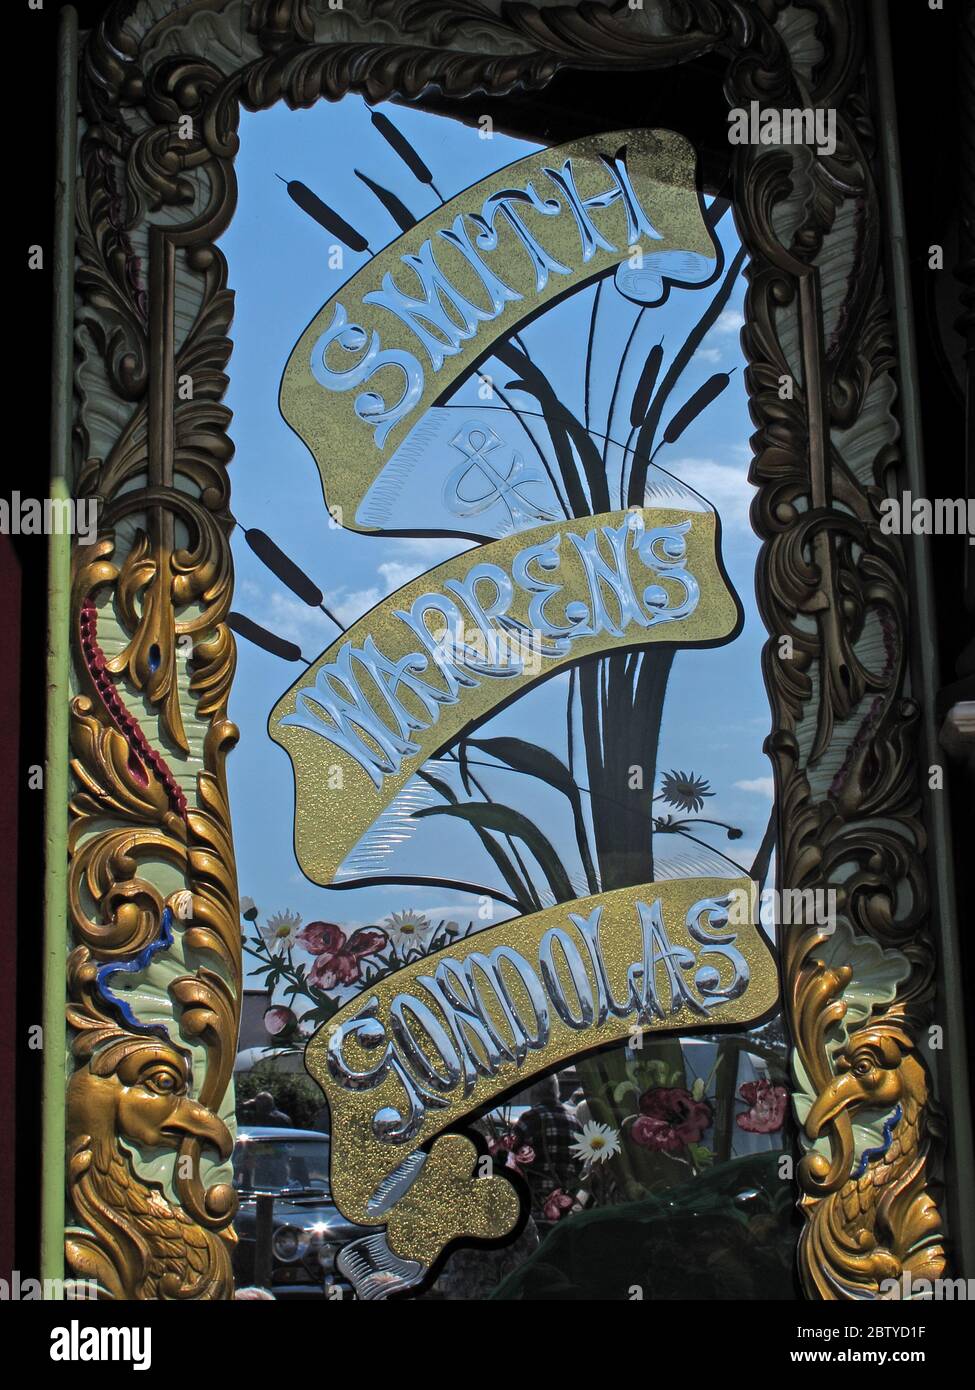 Smith and Warrens Gondolas, steam, fairground , organs, Cheshire, England, UK, WA4 Stock Photo